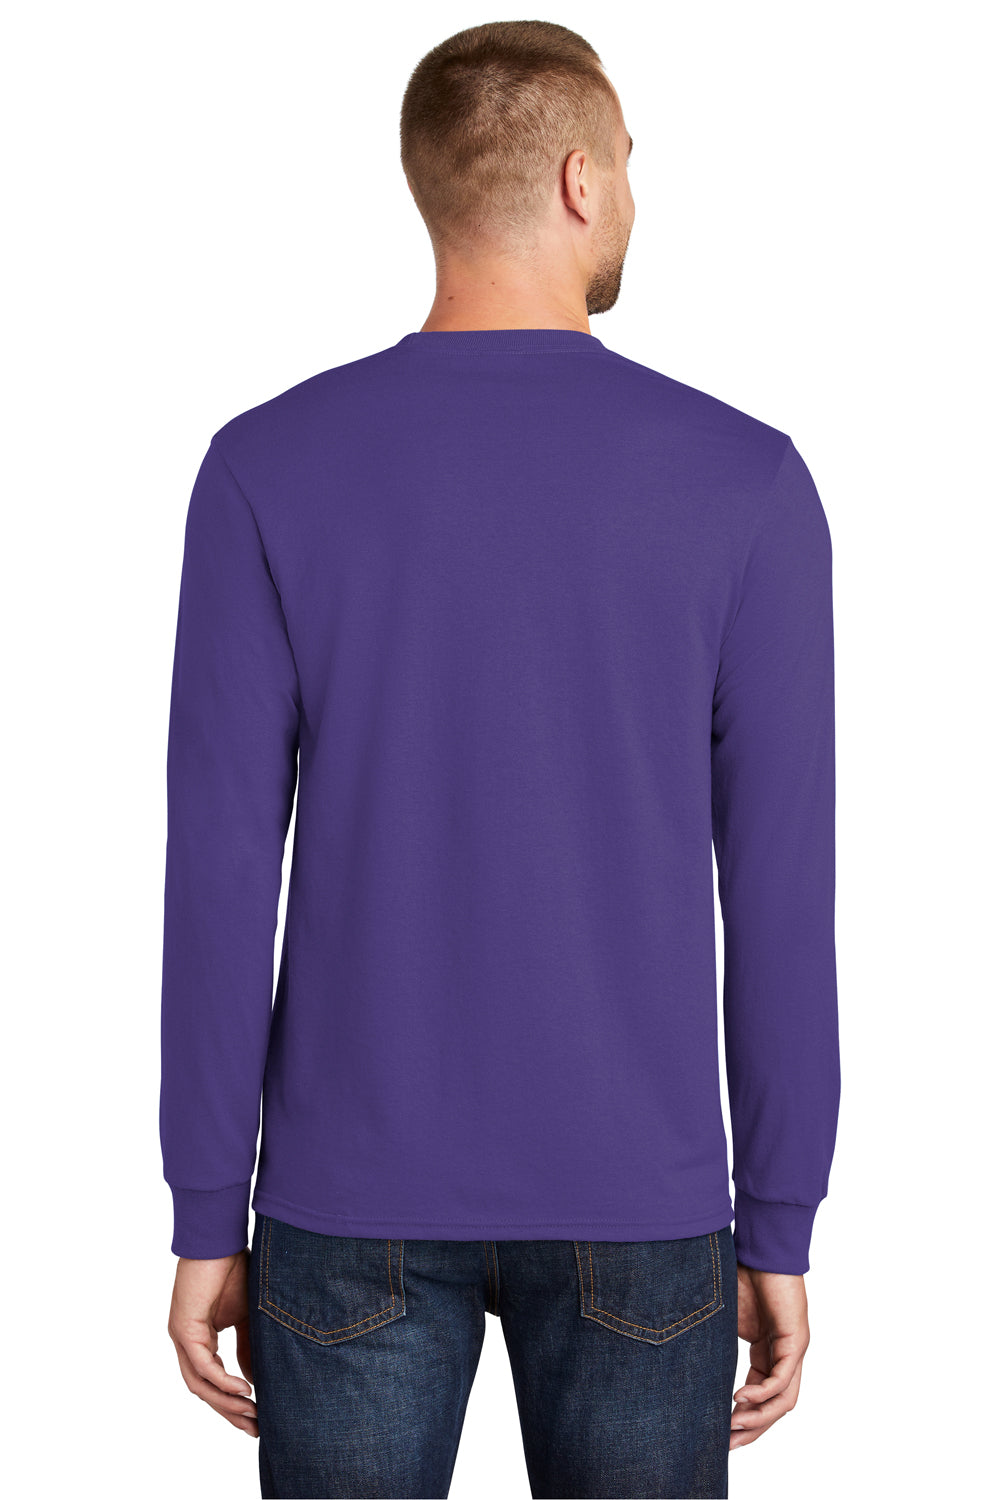 Port & Company PC55LS Mens Core Long Sleeve Crewneck T-Shirt Purple Back